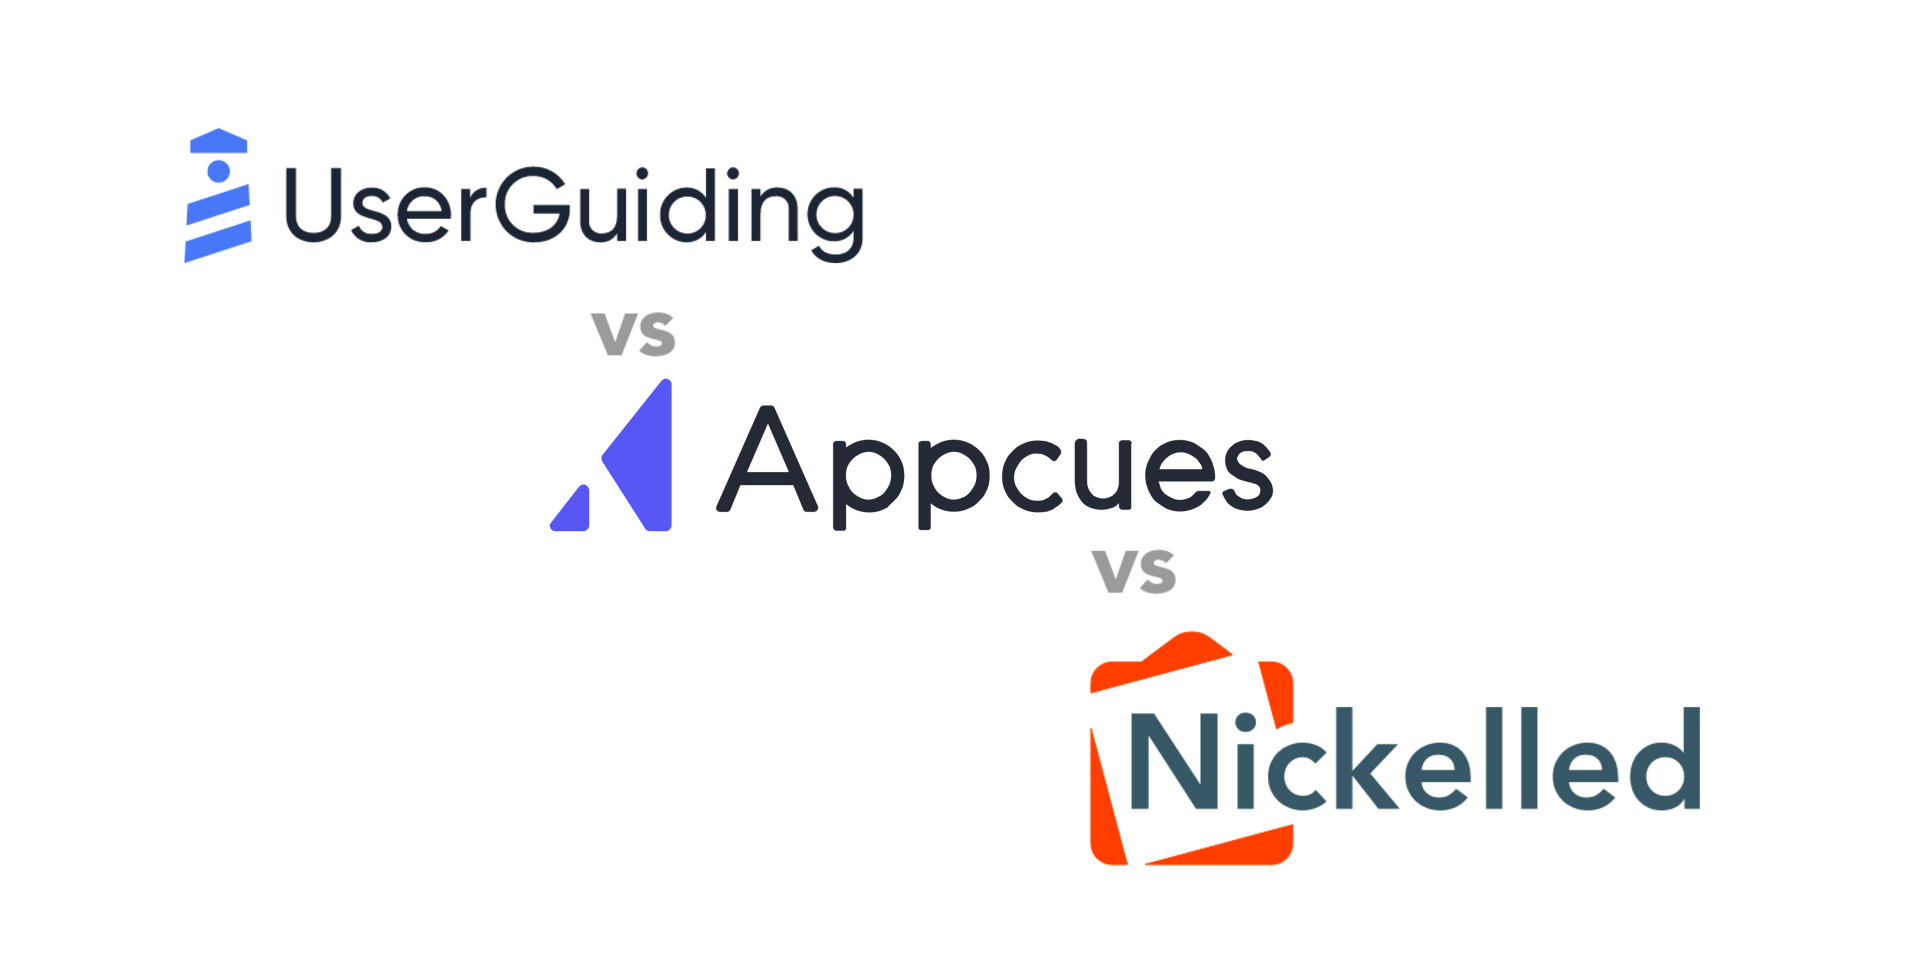 UserGuiding vs Appcues hero image